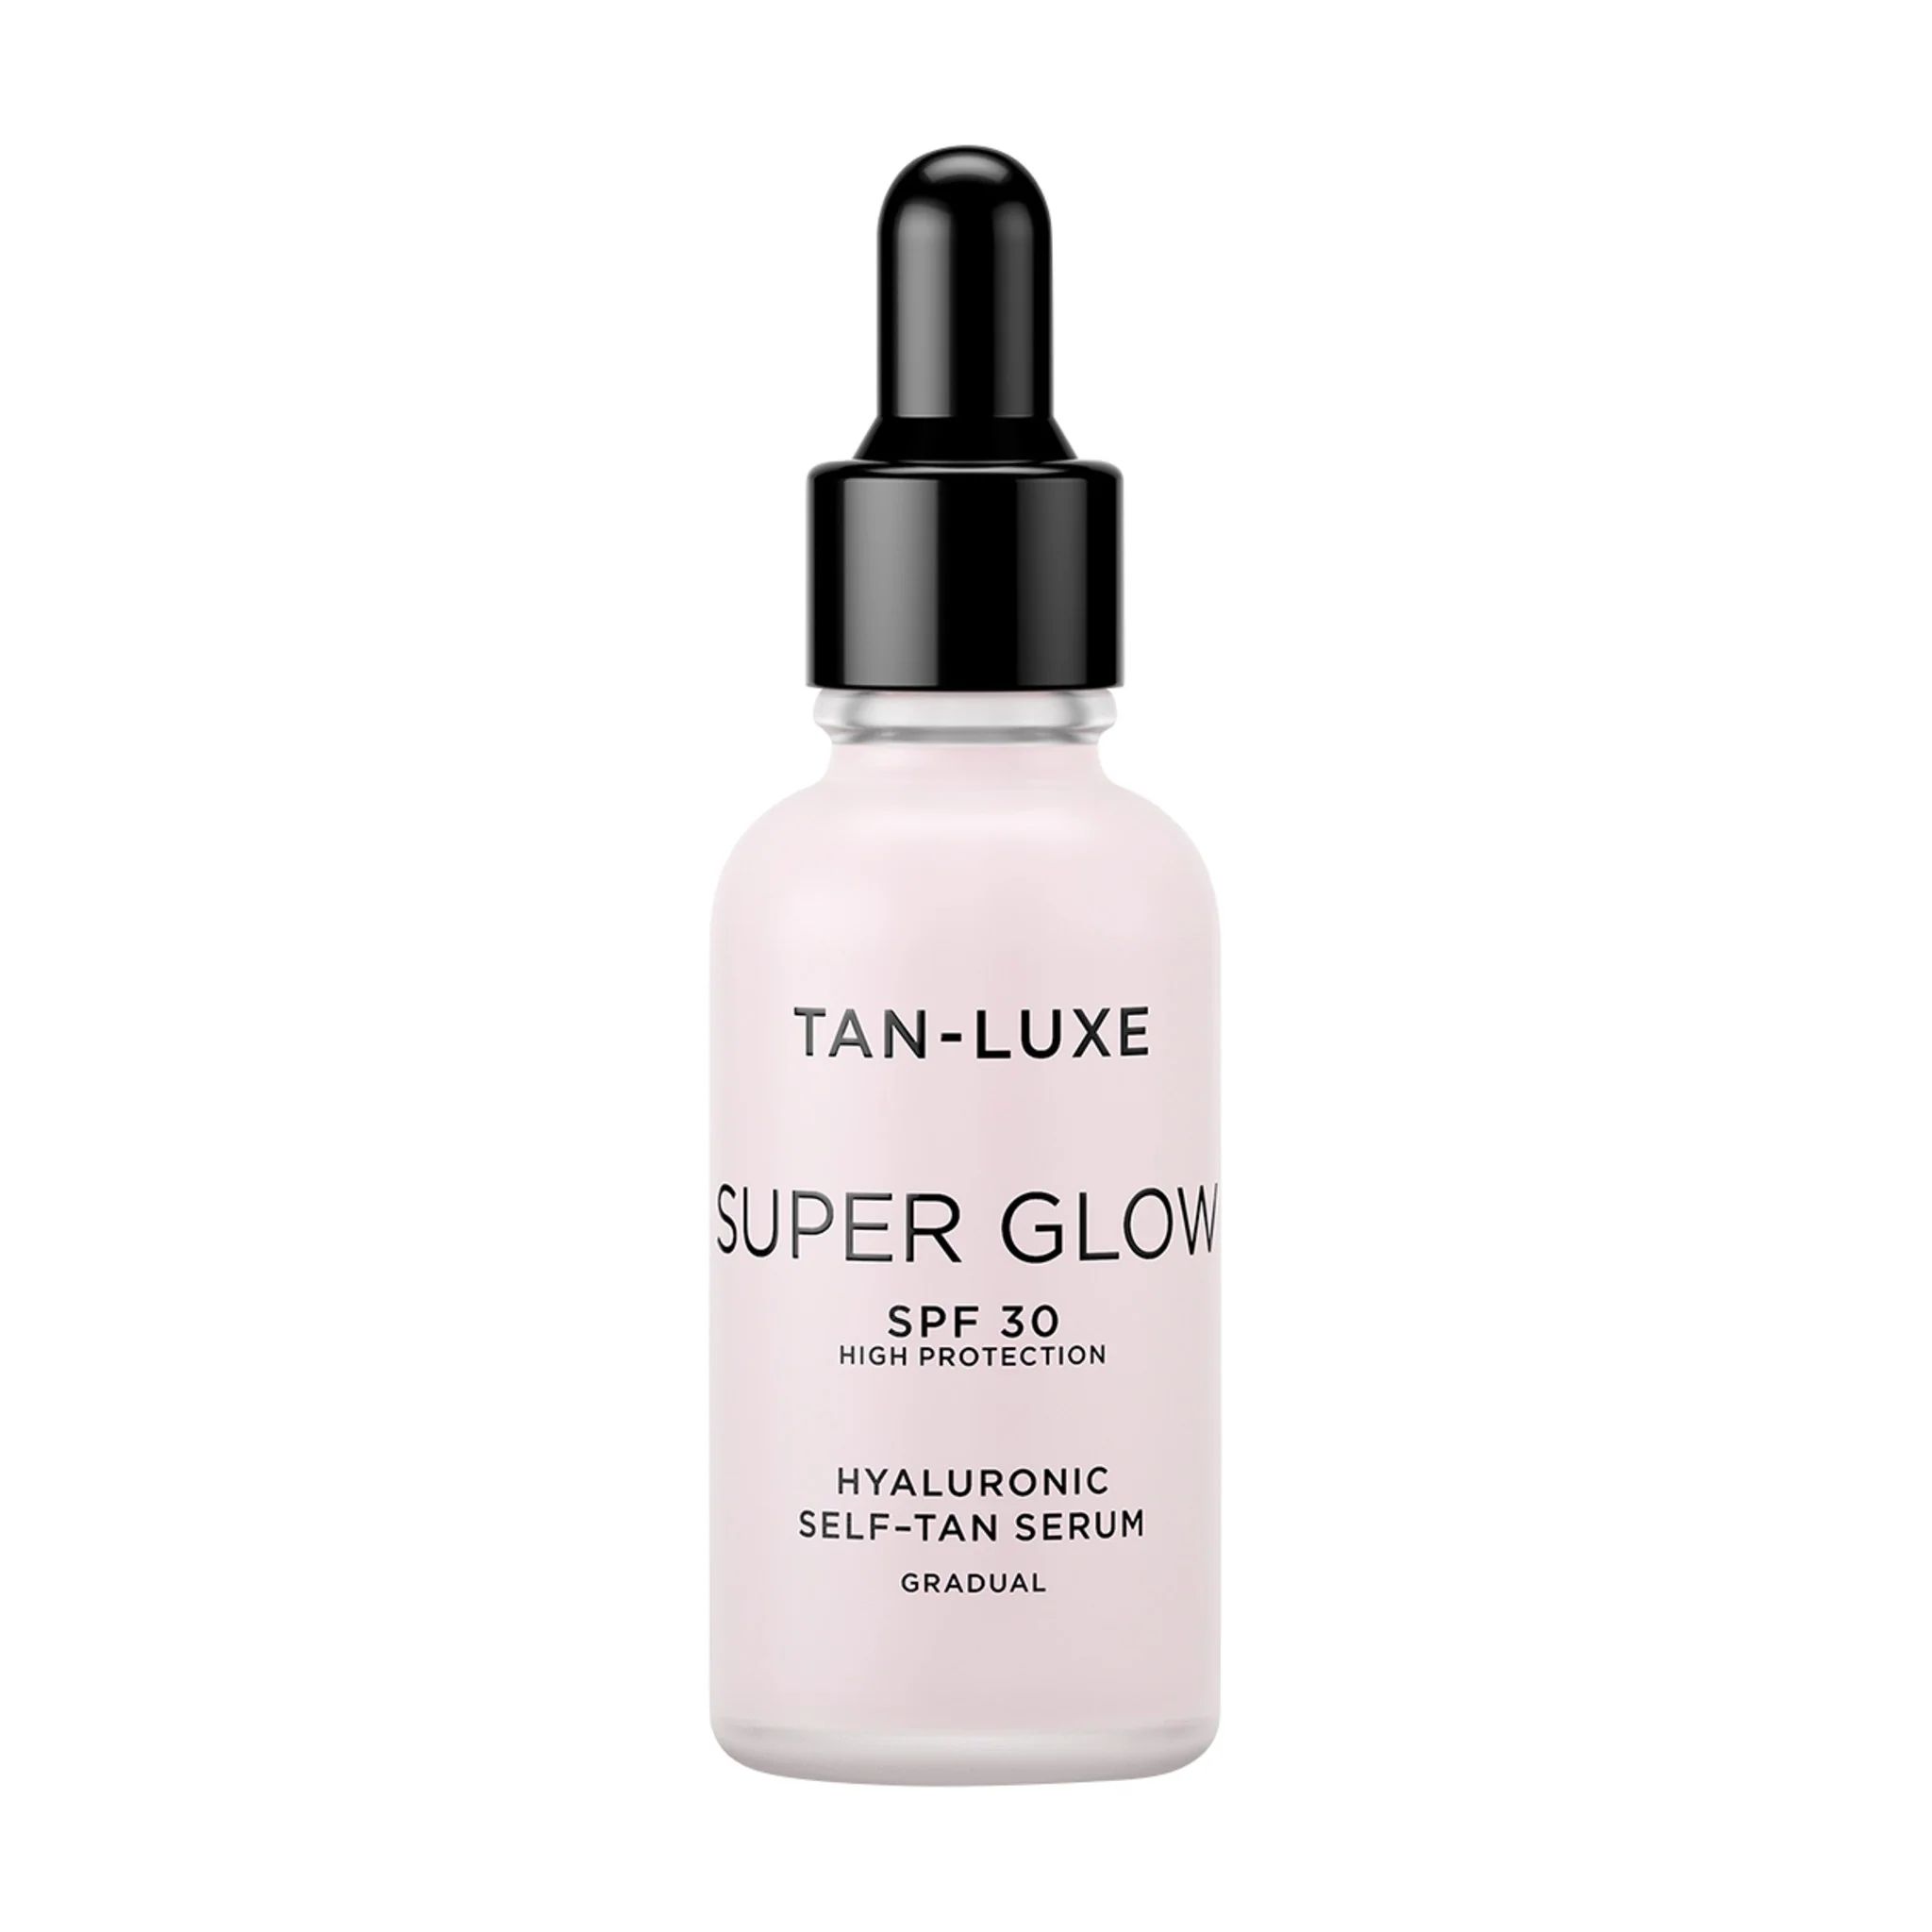 Super Glow Hyaluronic Self Tan Serum SPF 30 | Bluemercury, Inc.